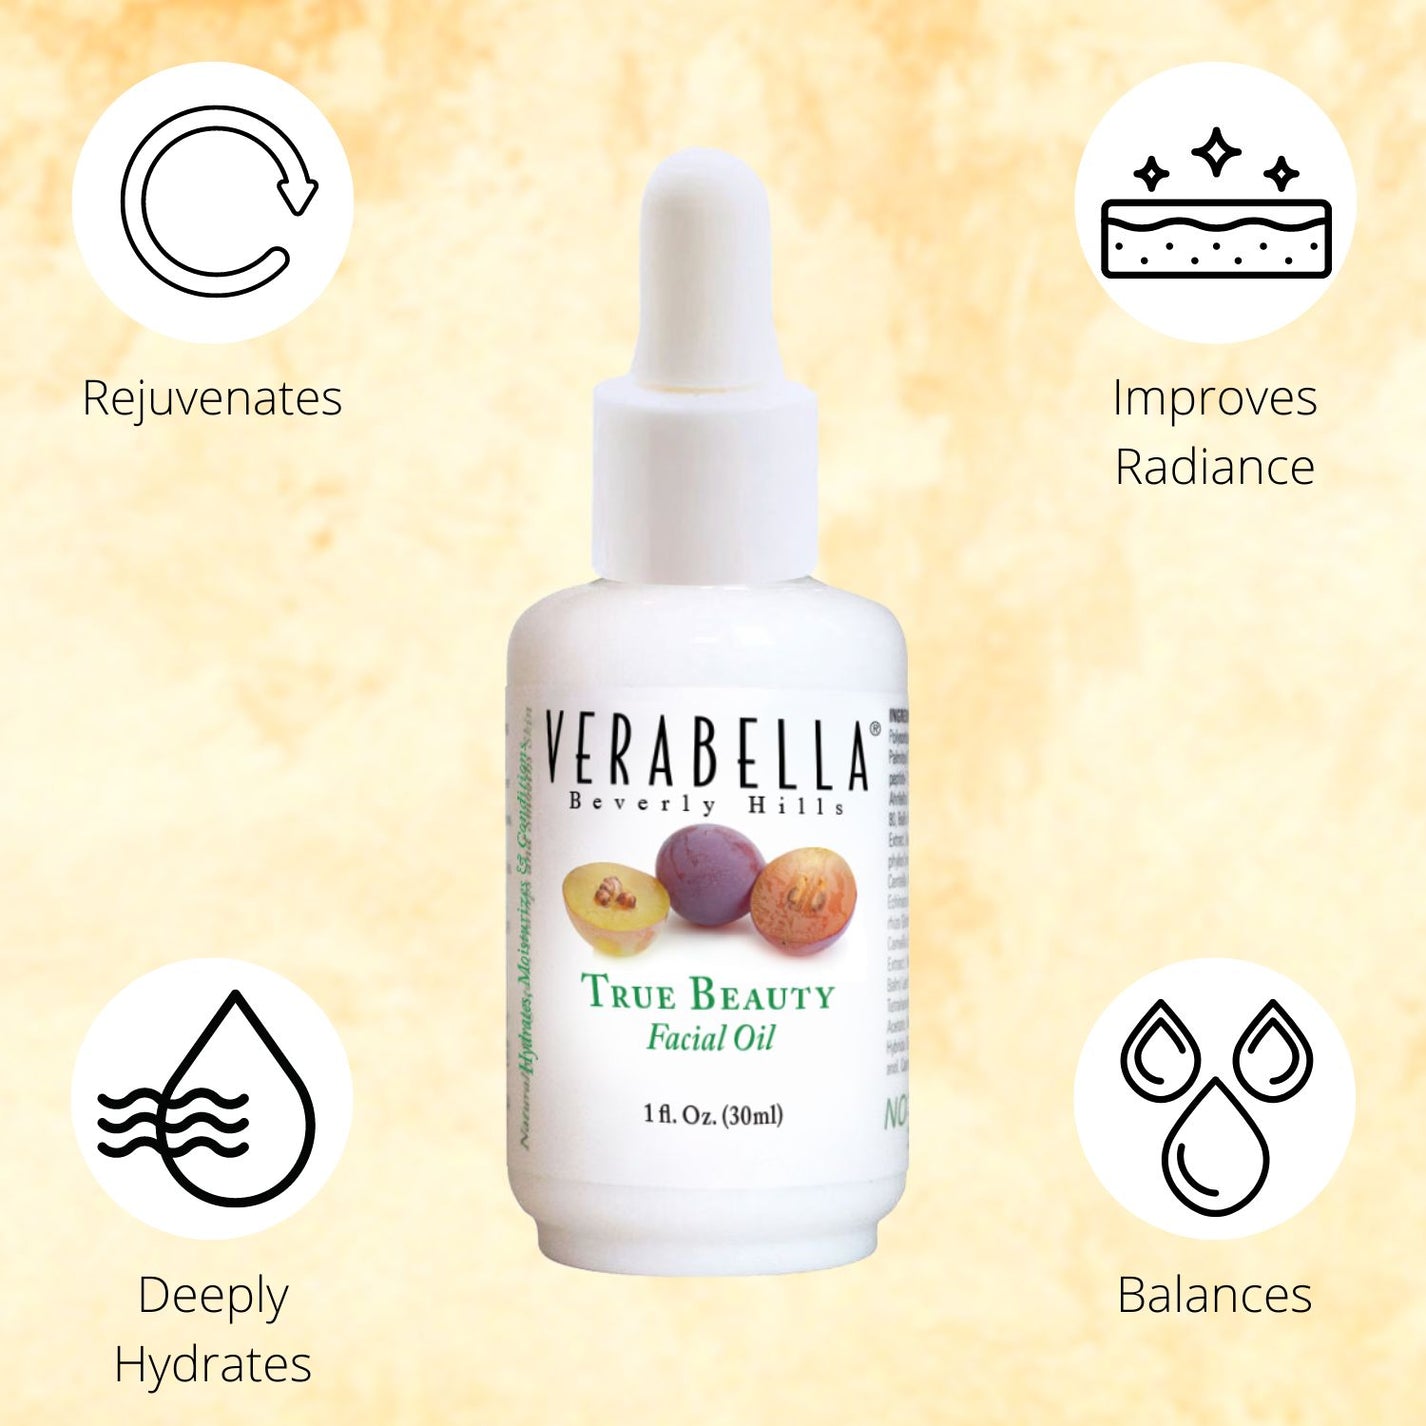 Verabella True Beauty Facial Oil hydrates and balances